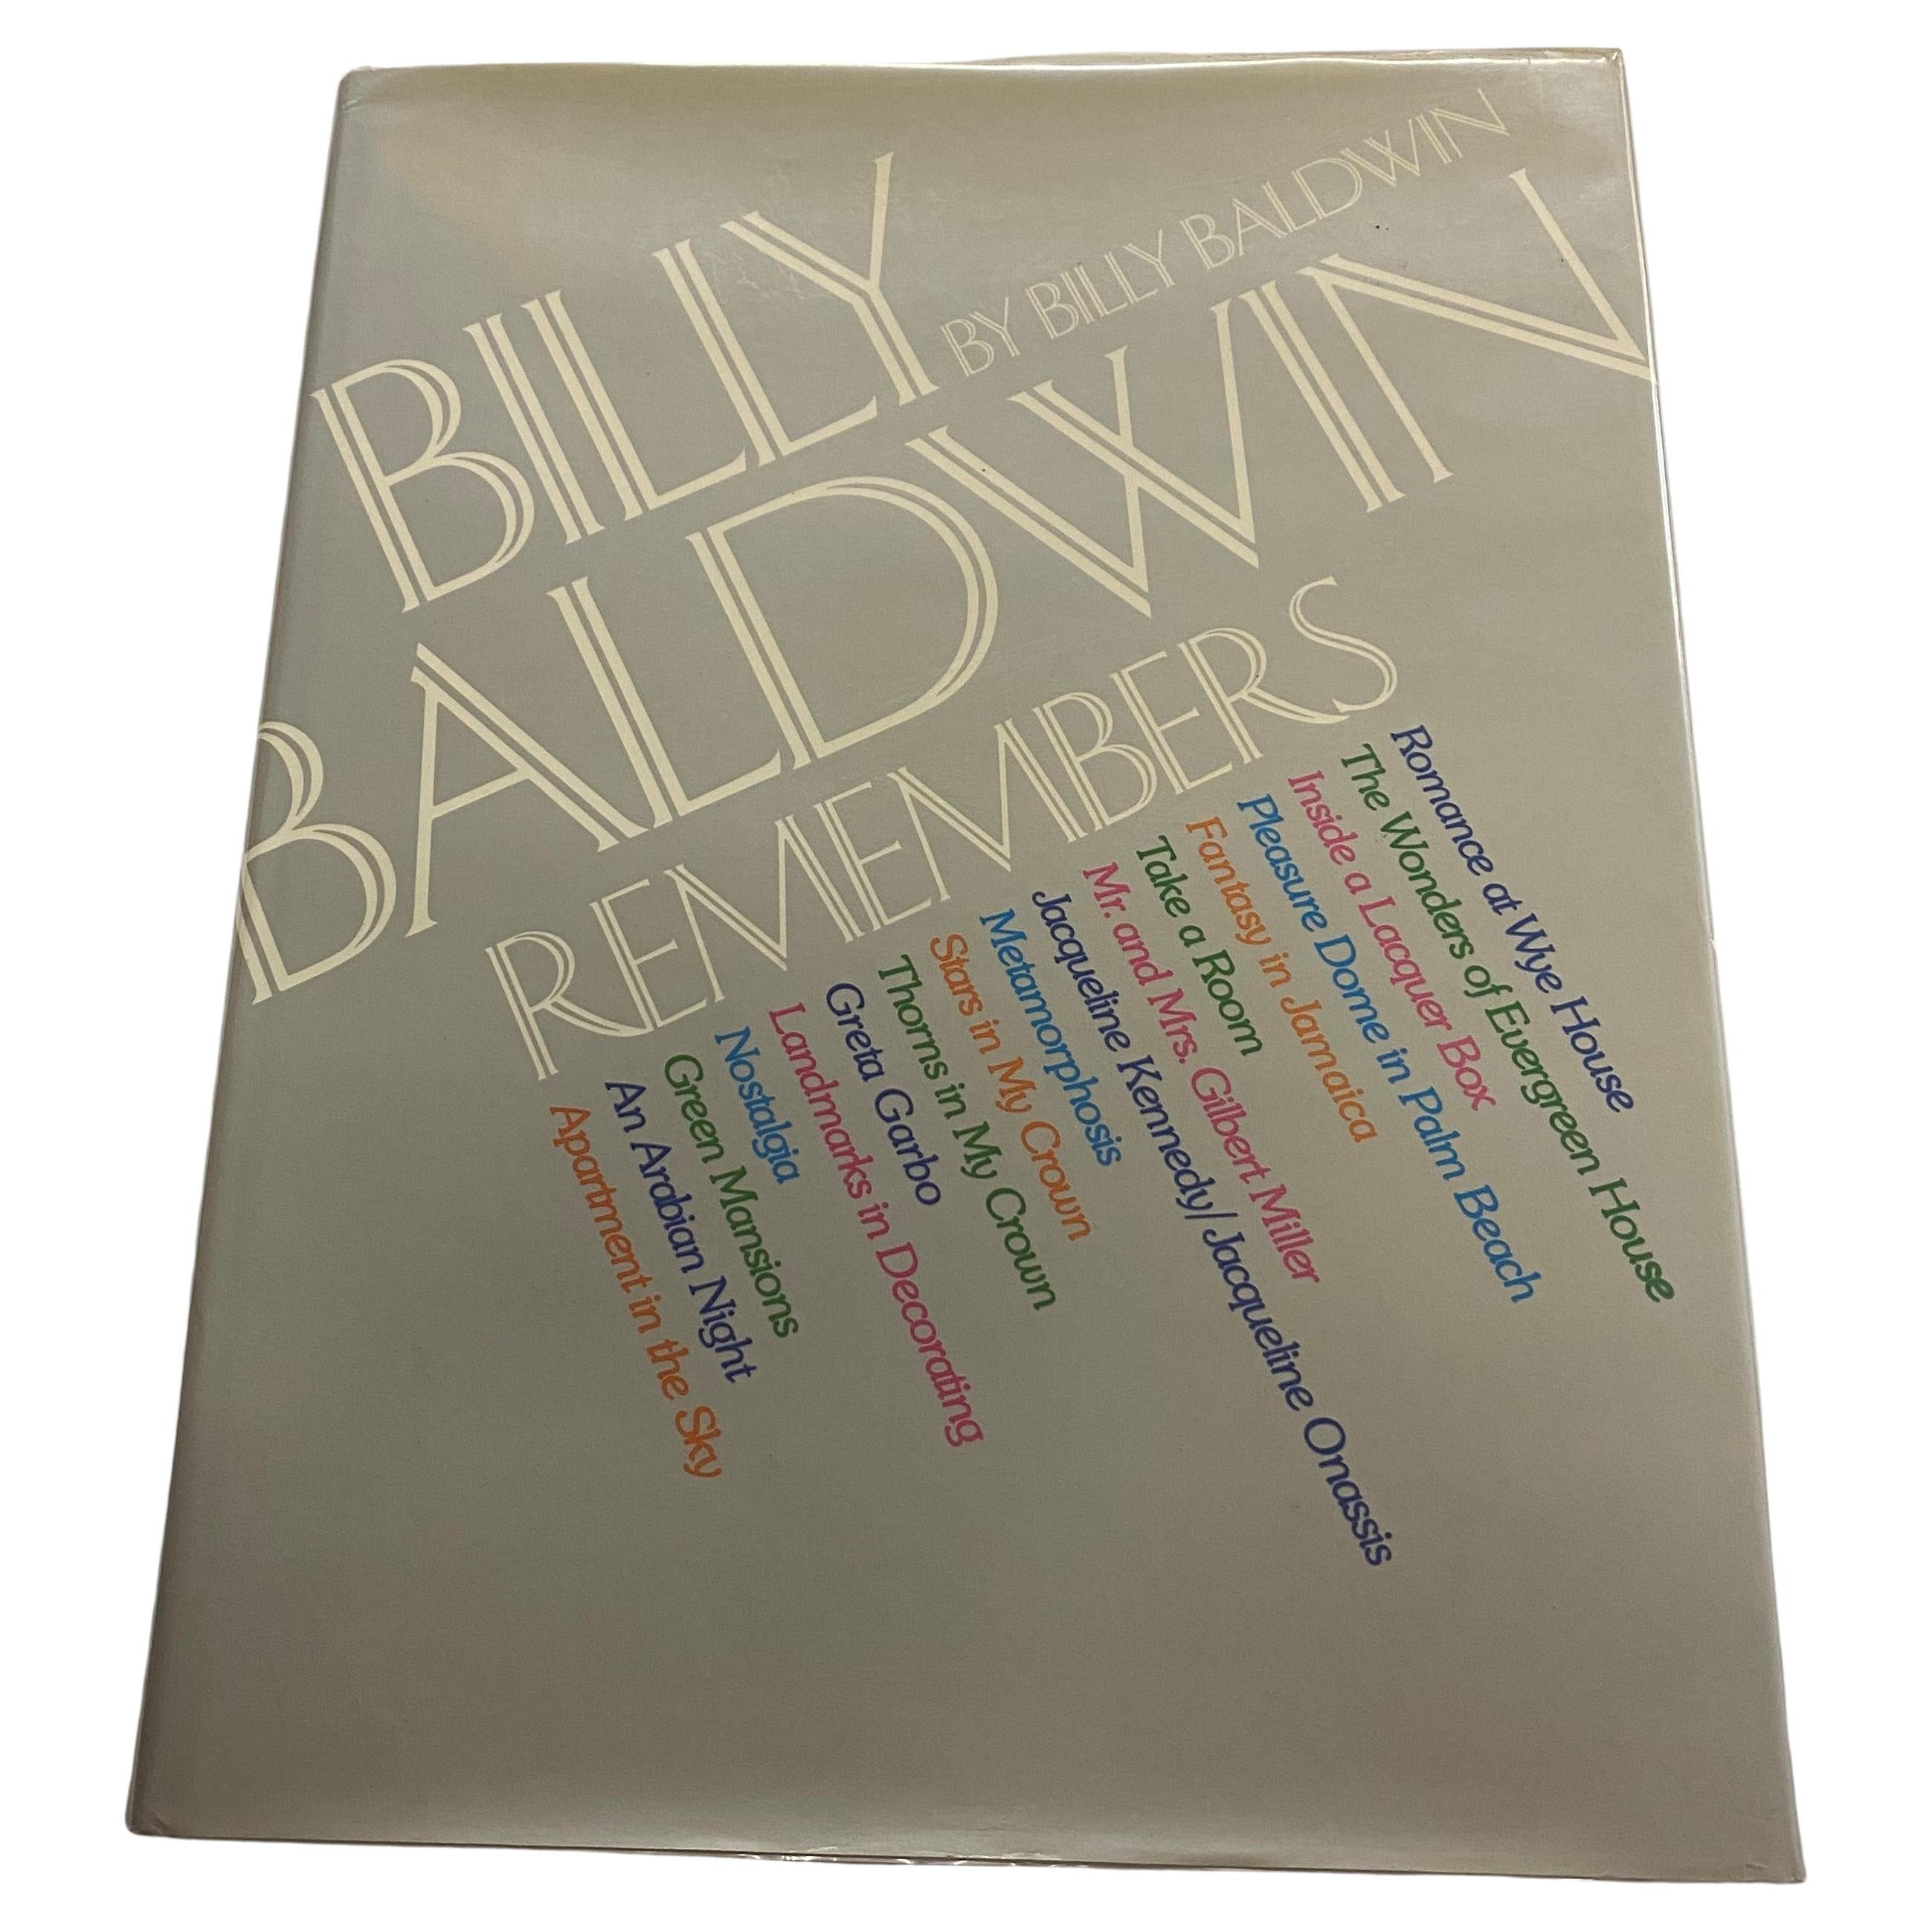 Billy Baldwin Remembers by Billy Baldwin (Book)